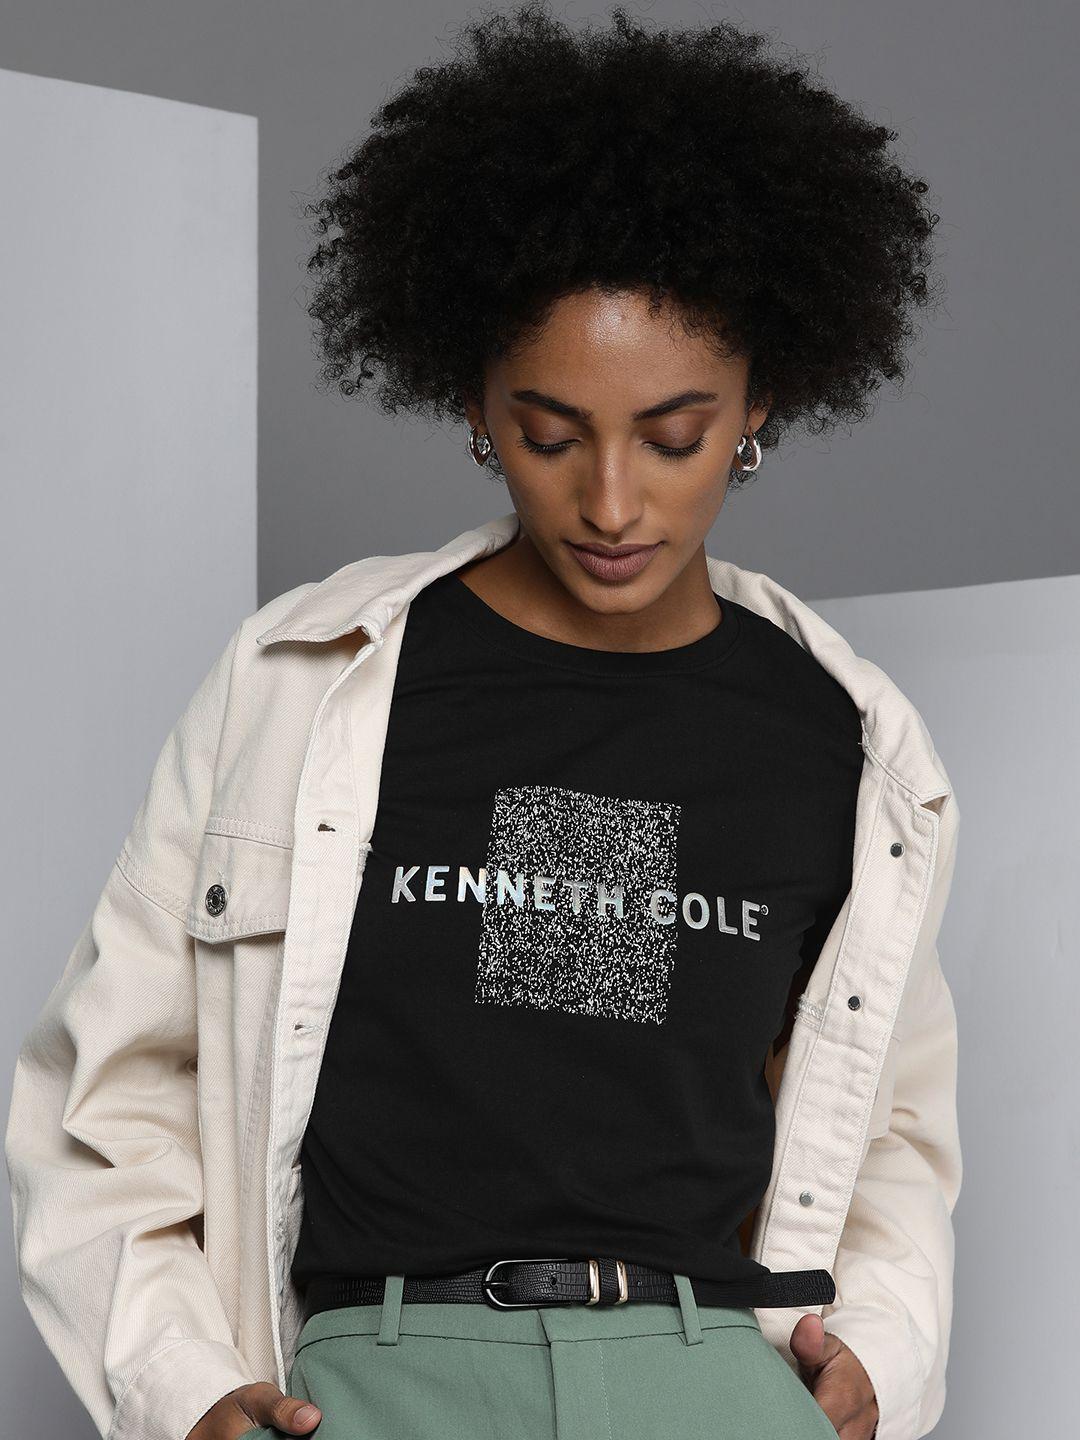 kenneth cole luz women black & white brand logo printed t-shirt